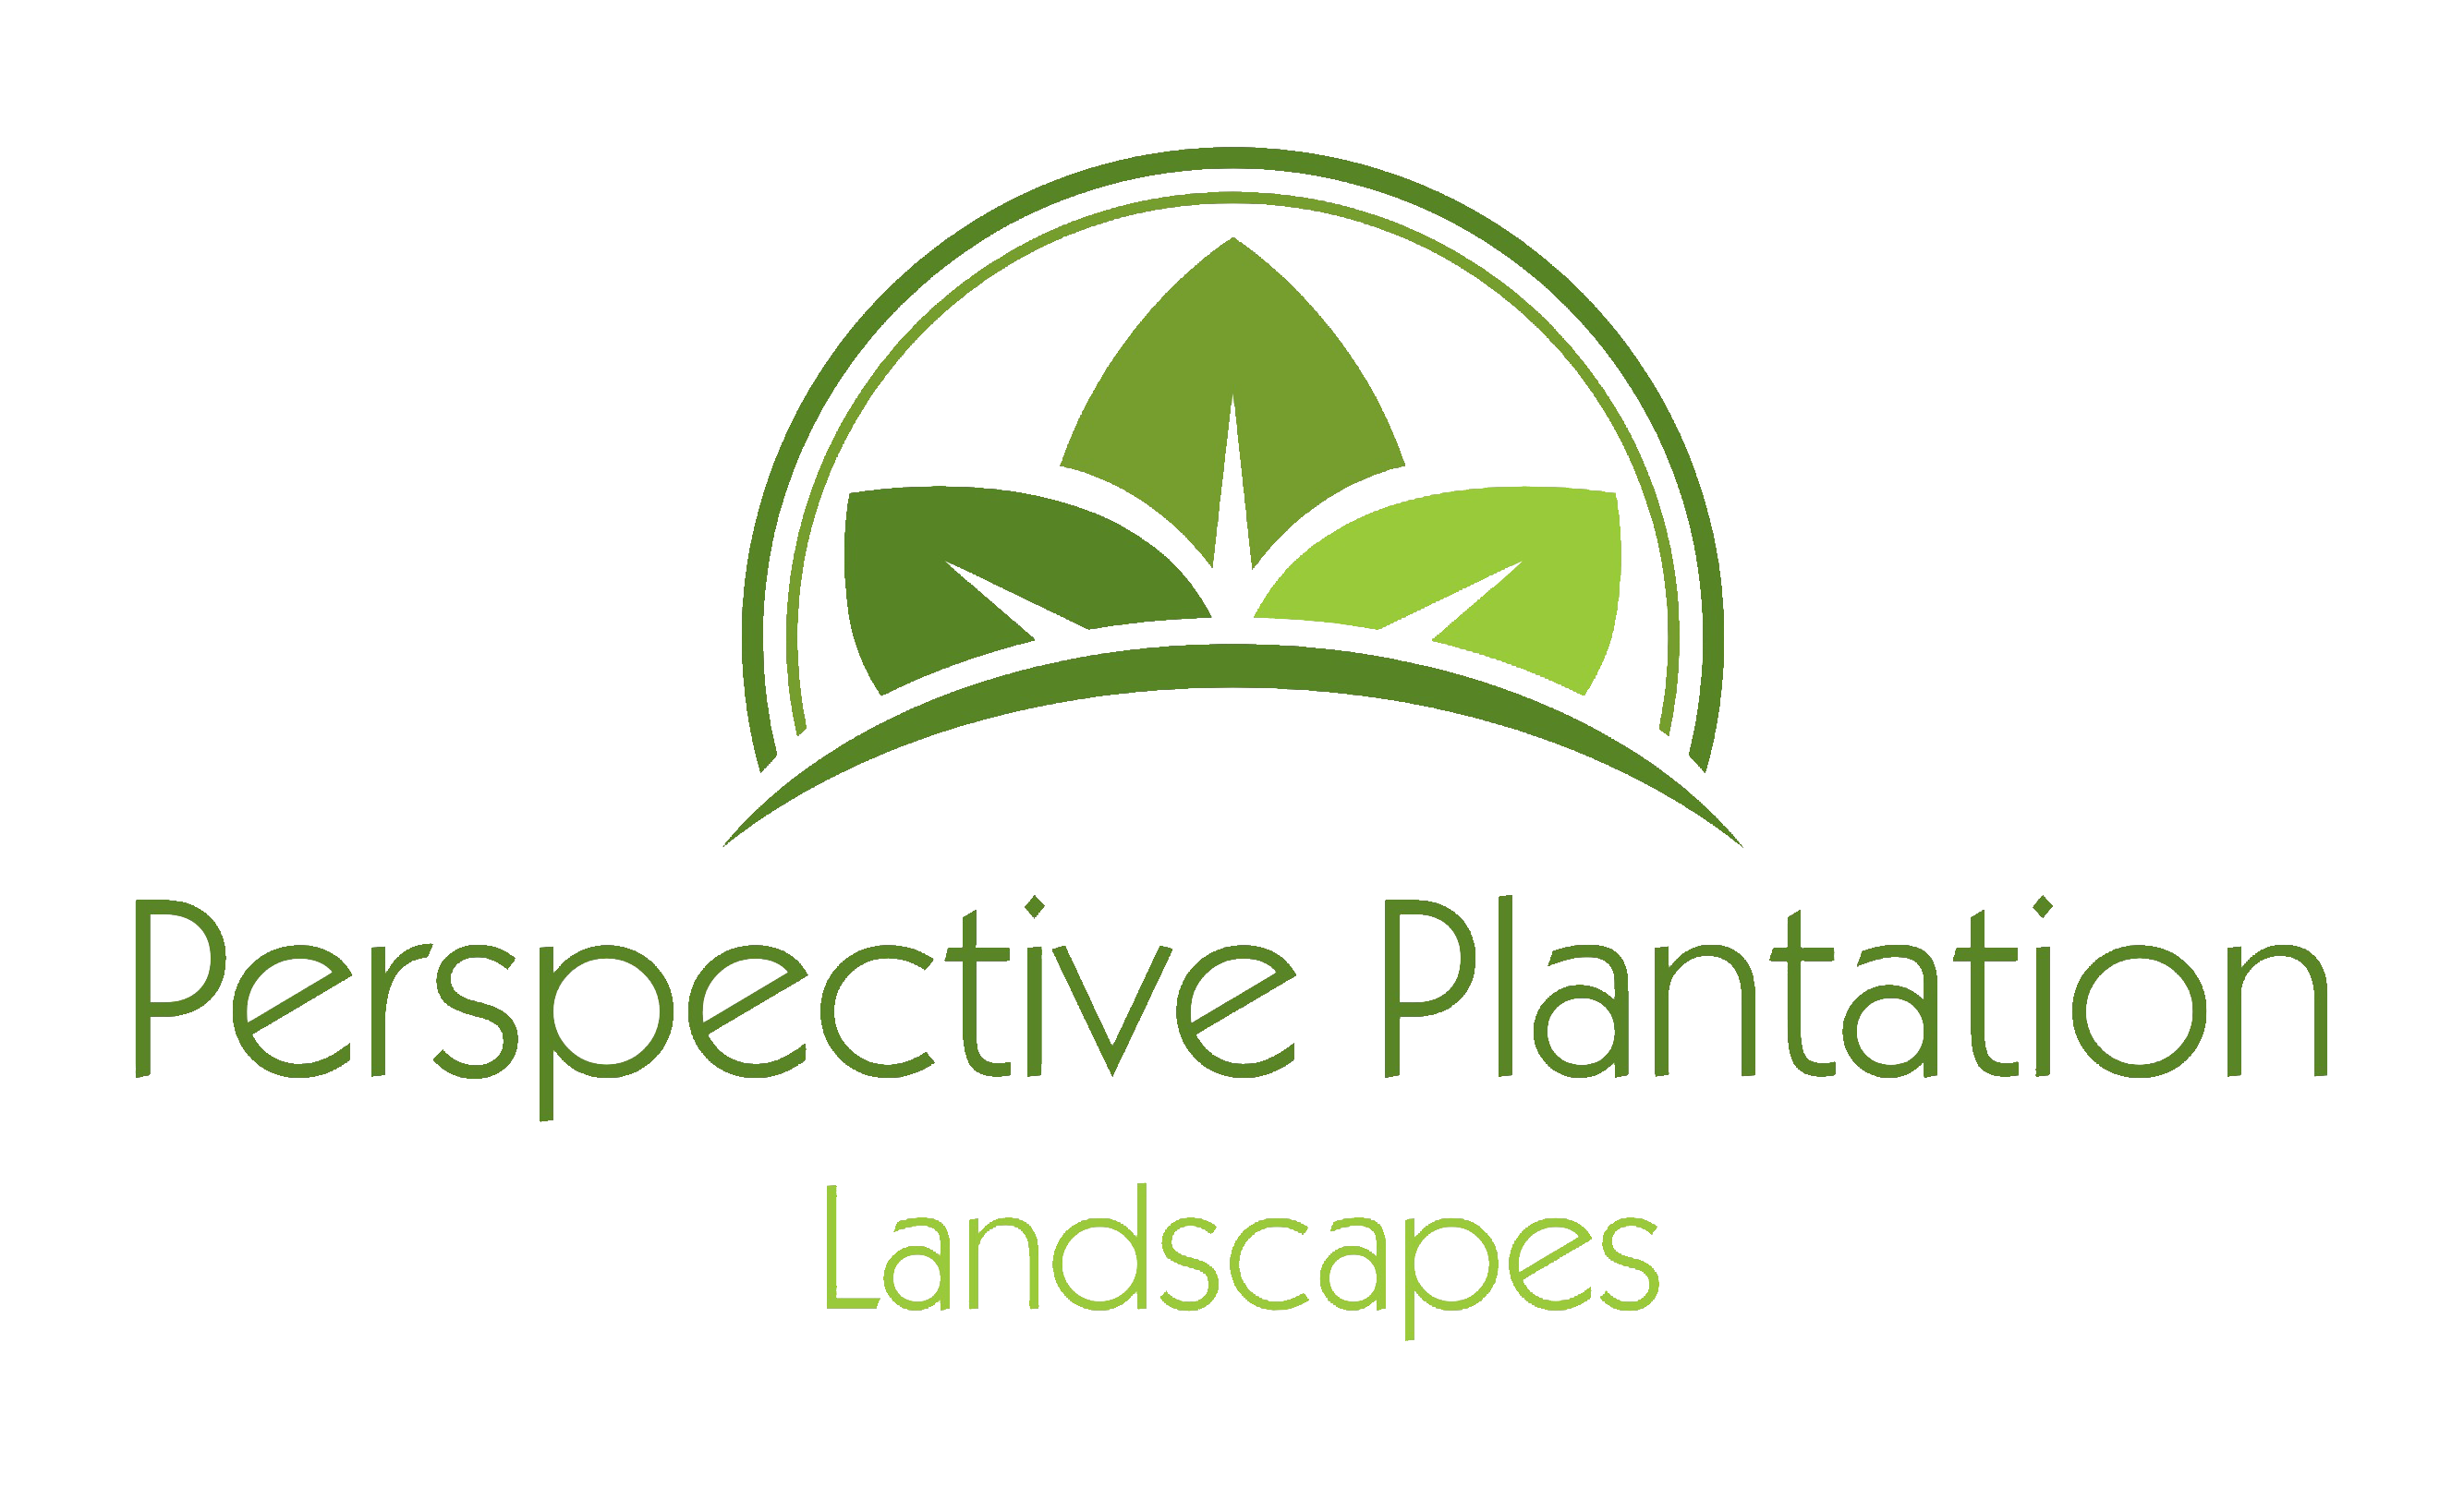 Perspective Plantation Landscapes